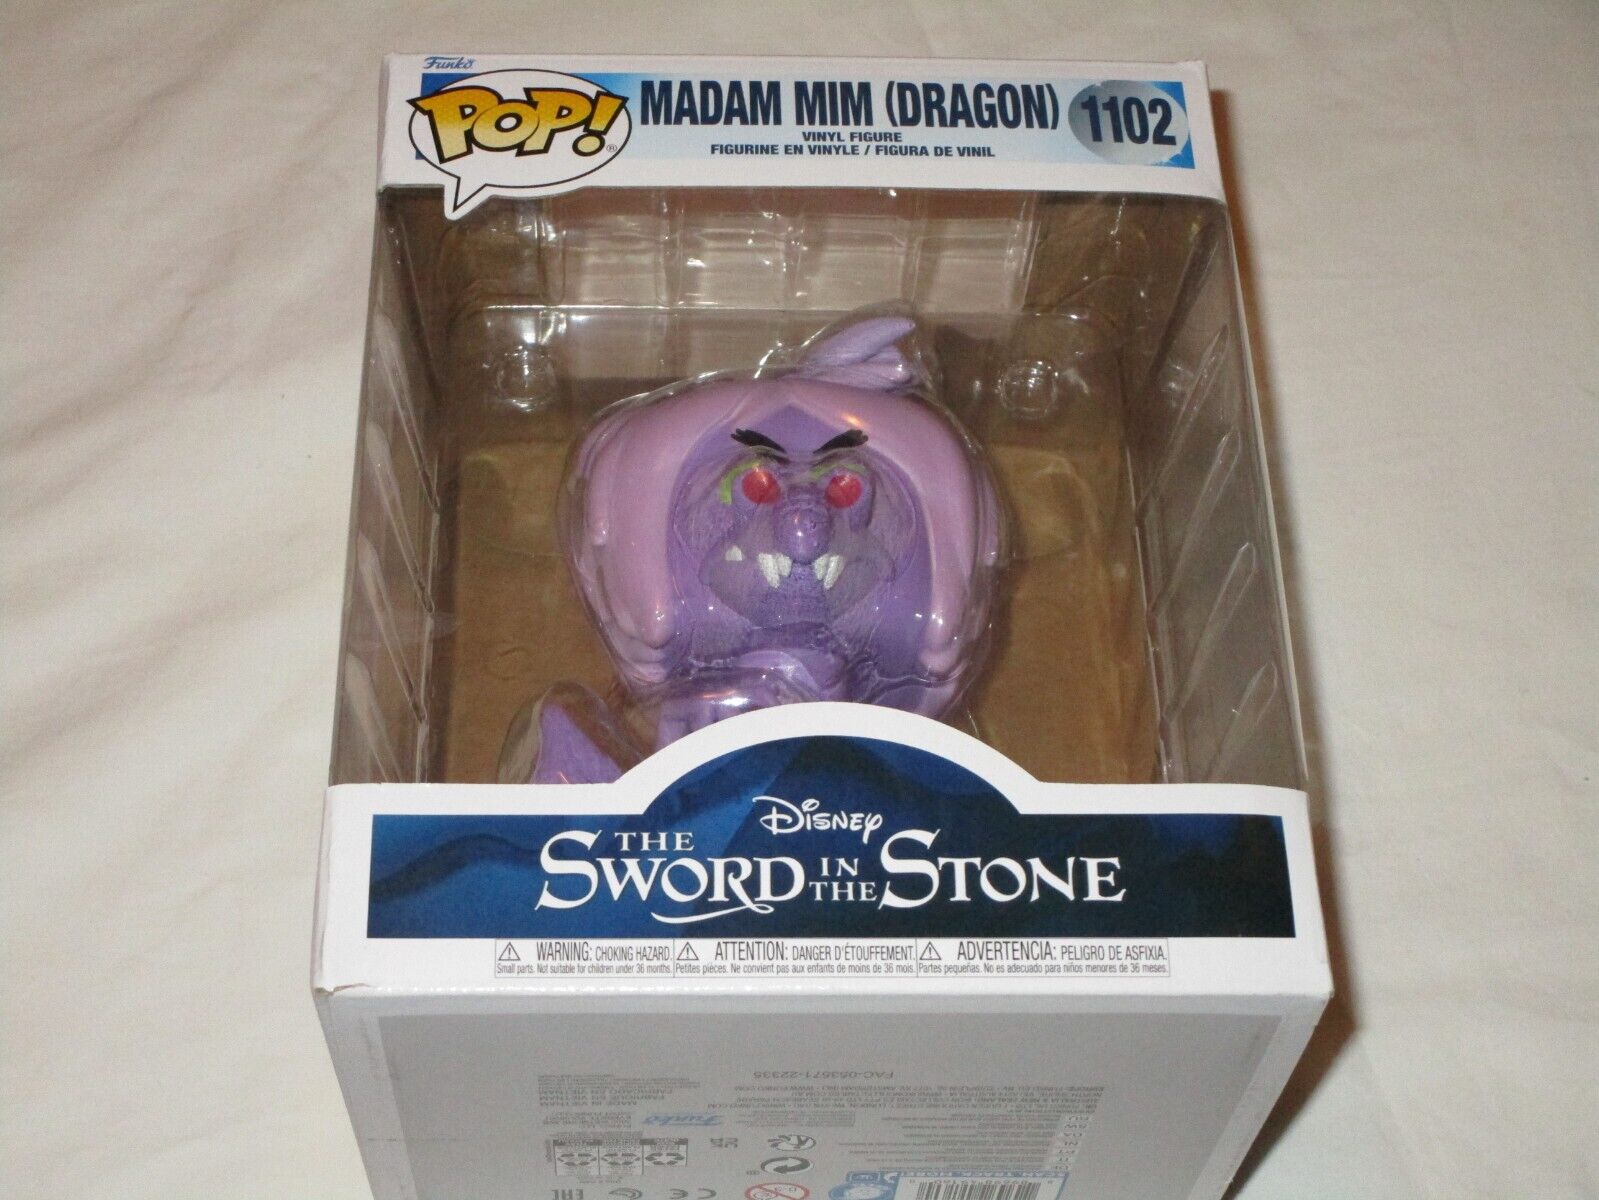 Funko Pop Disney The Sword in the Stone Madam Mim as Dragon #1102 Damaged